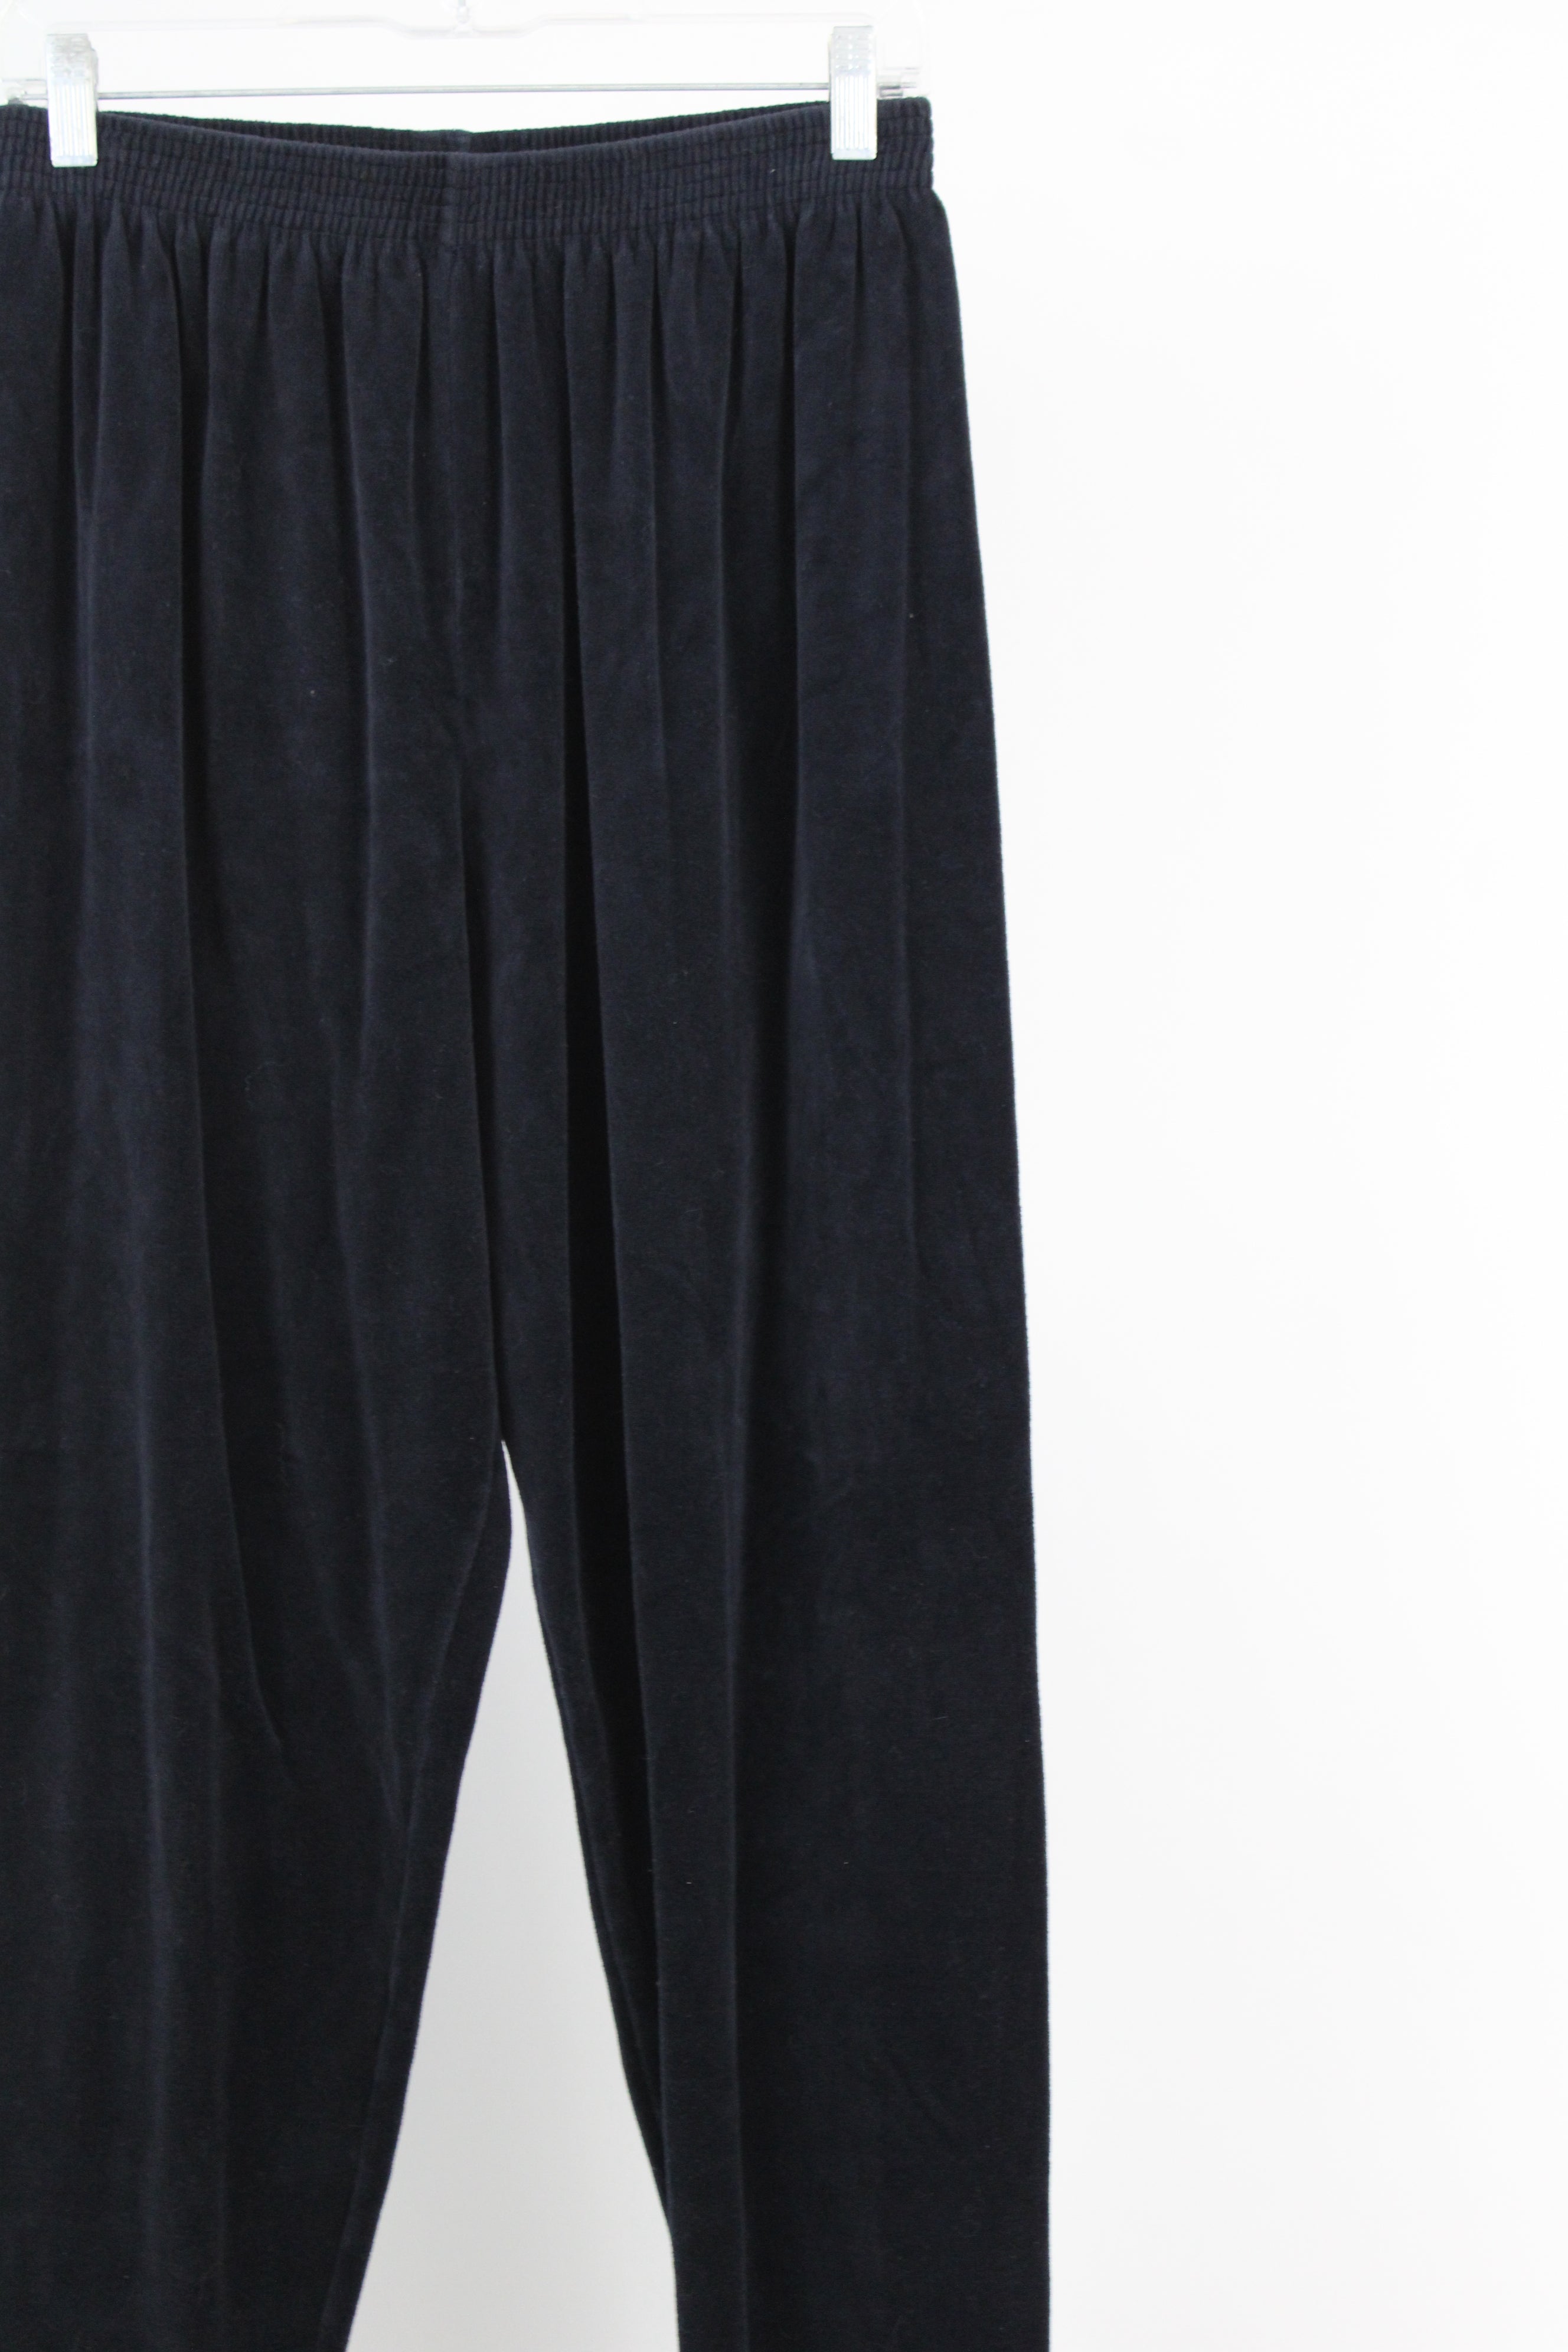 Orvis Terry Cloth Blue Pants | L